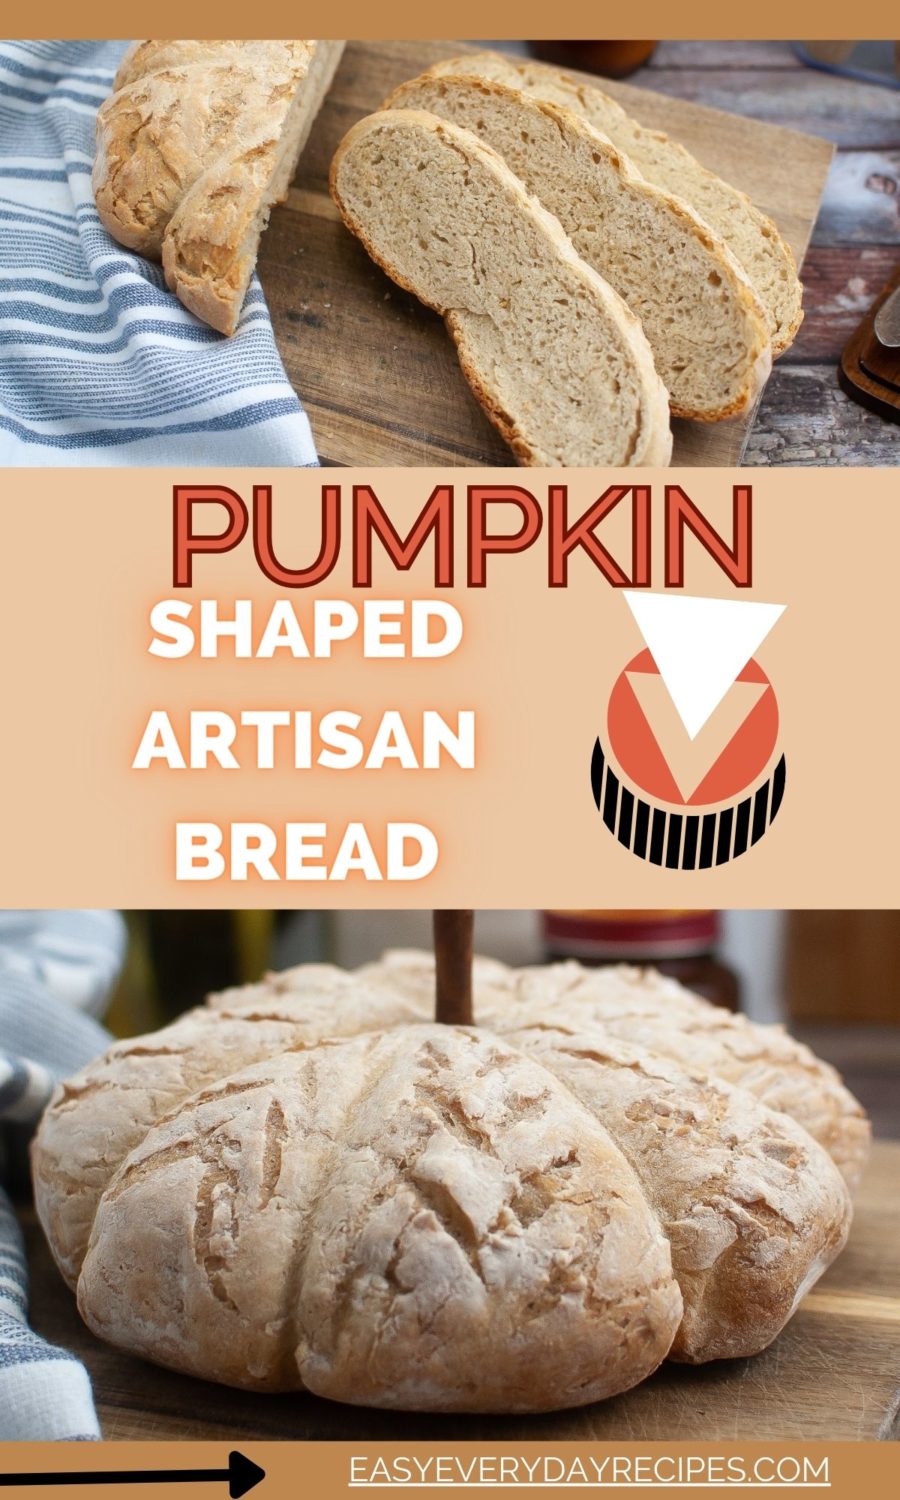 Pumpkin shaped artisan bread.